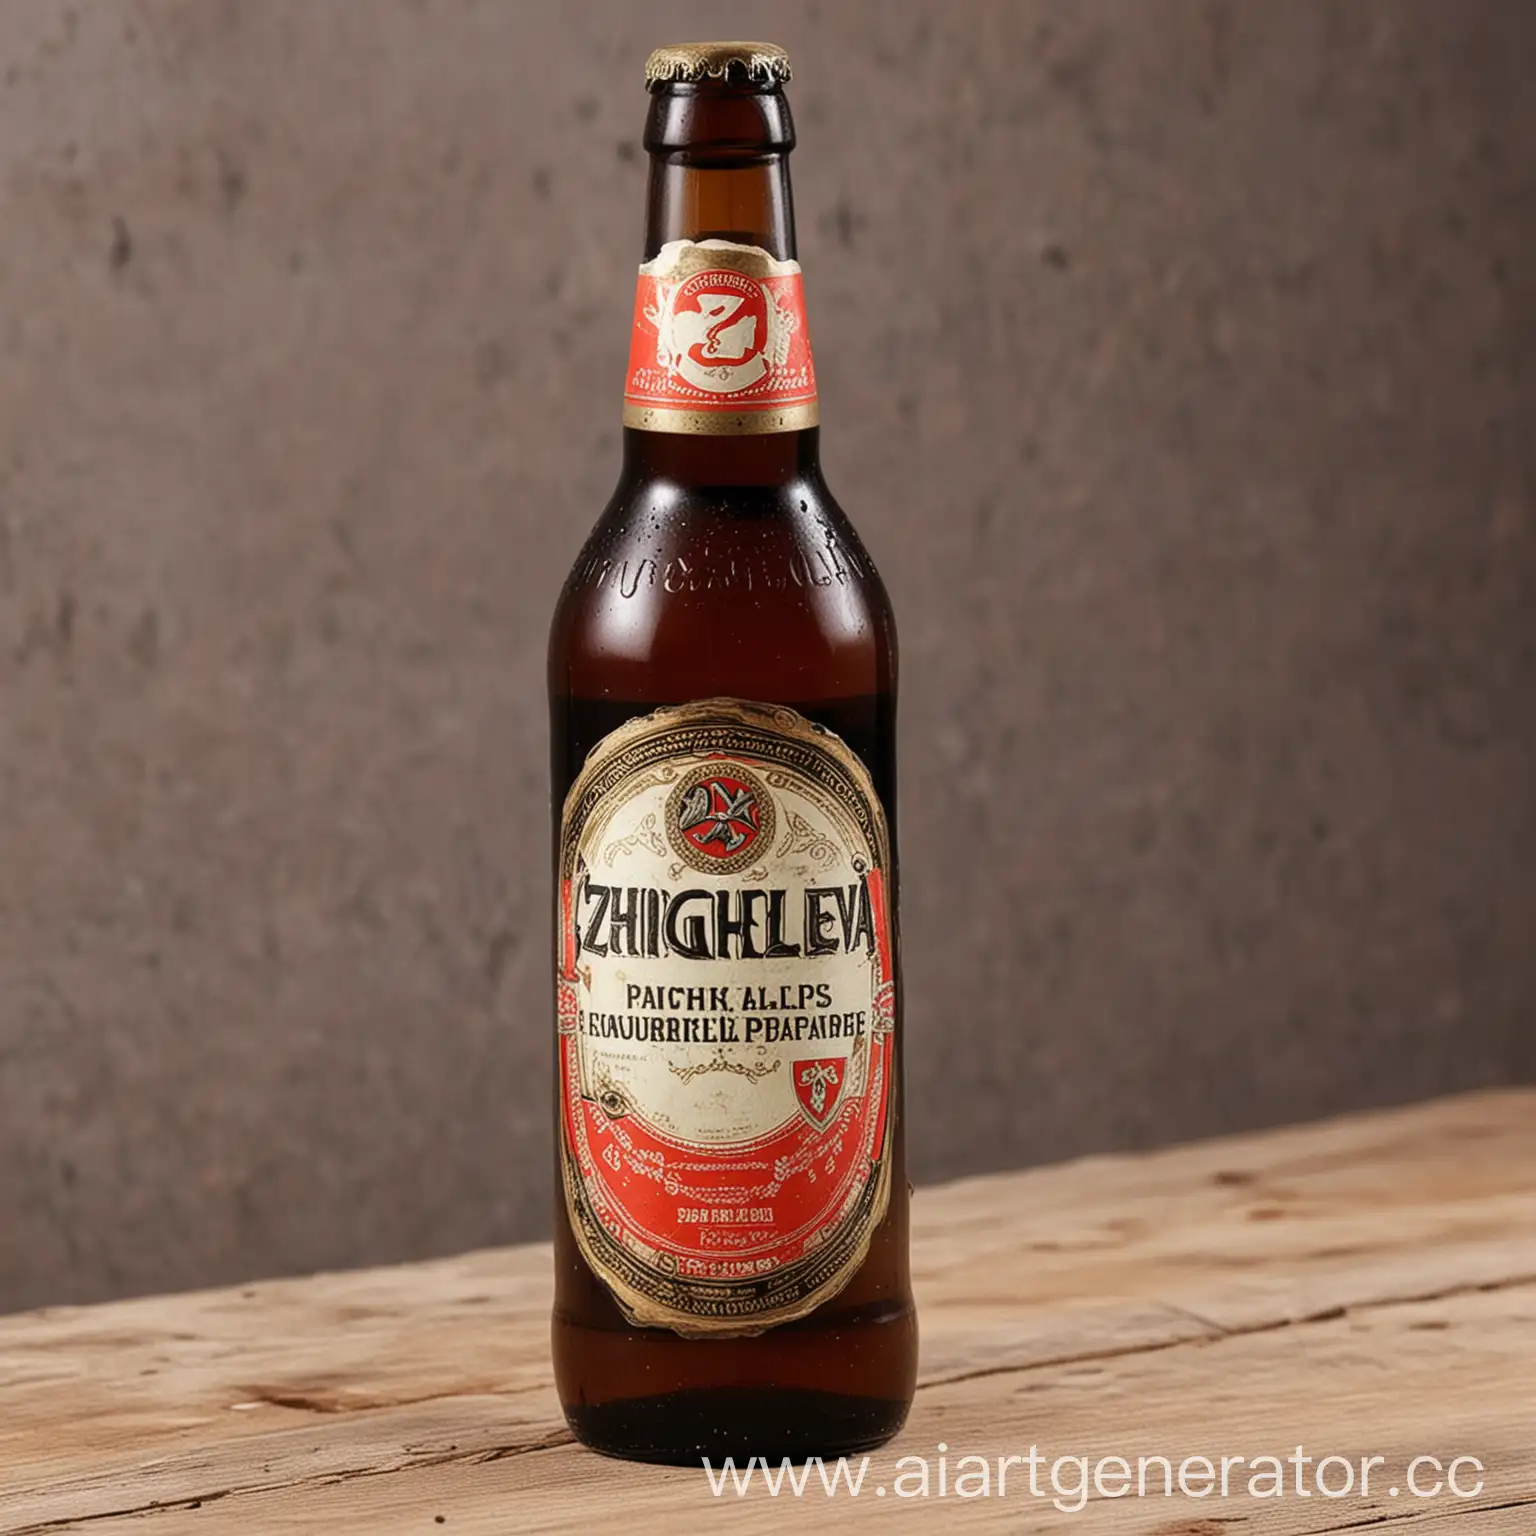 Vintage-Beer-Bottle-with-Zhiguleva-Offenses-Label